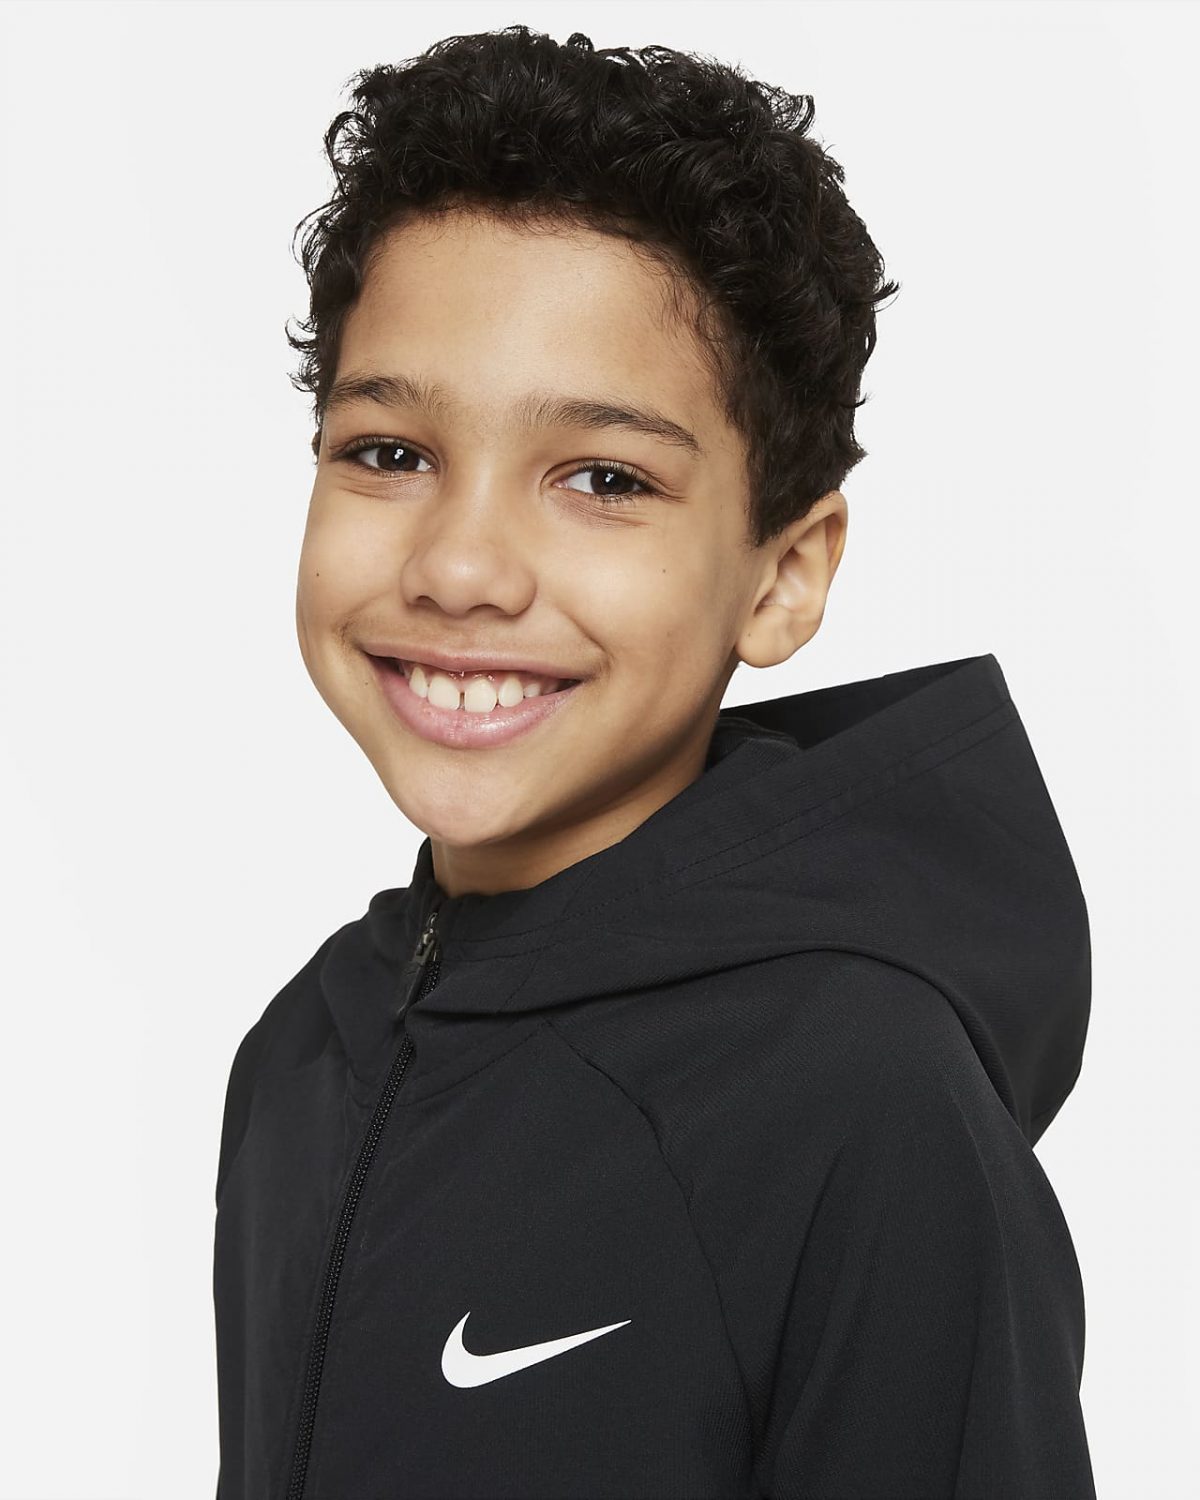 Детская куртка Nike Dri-FIT